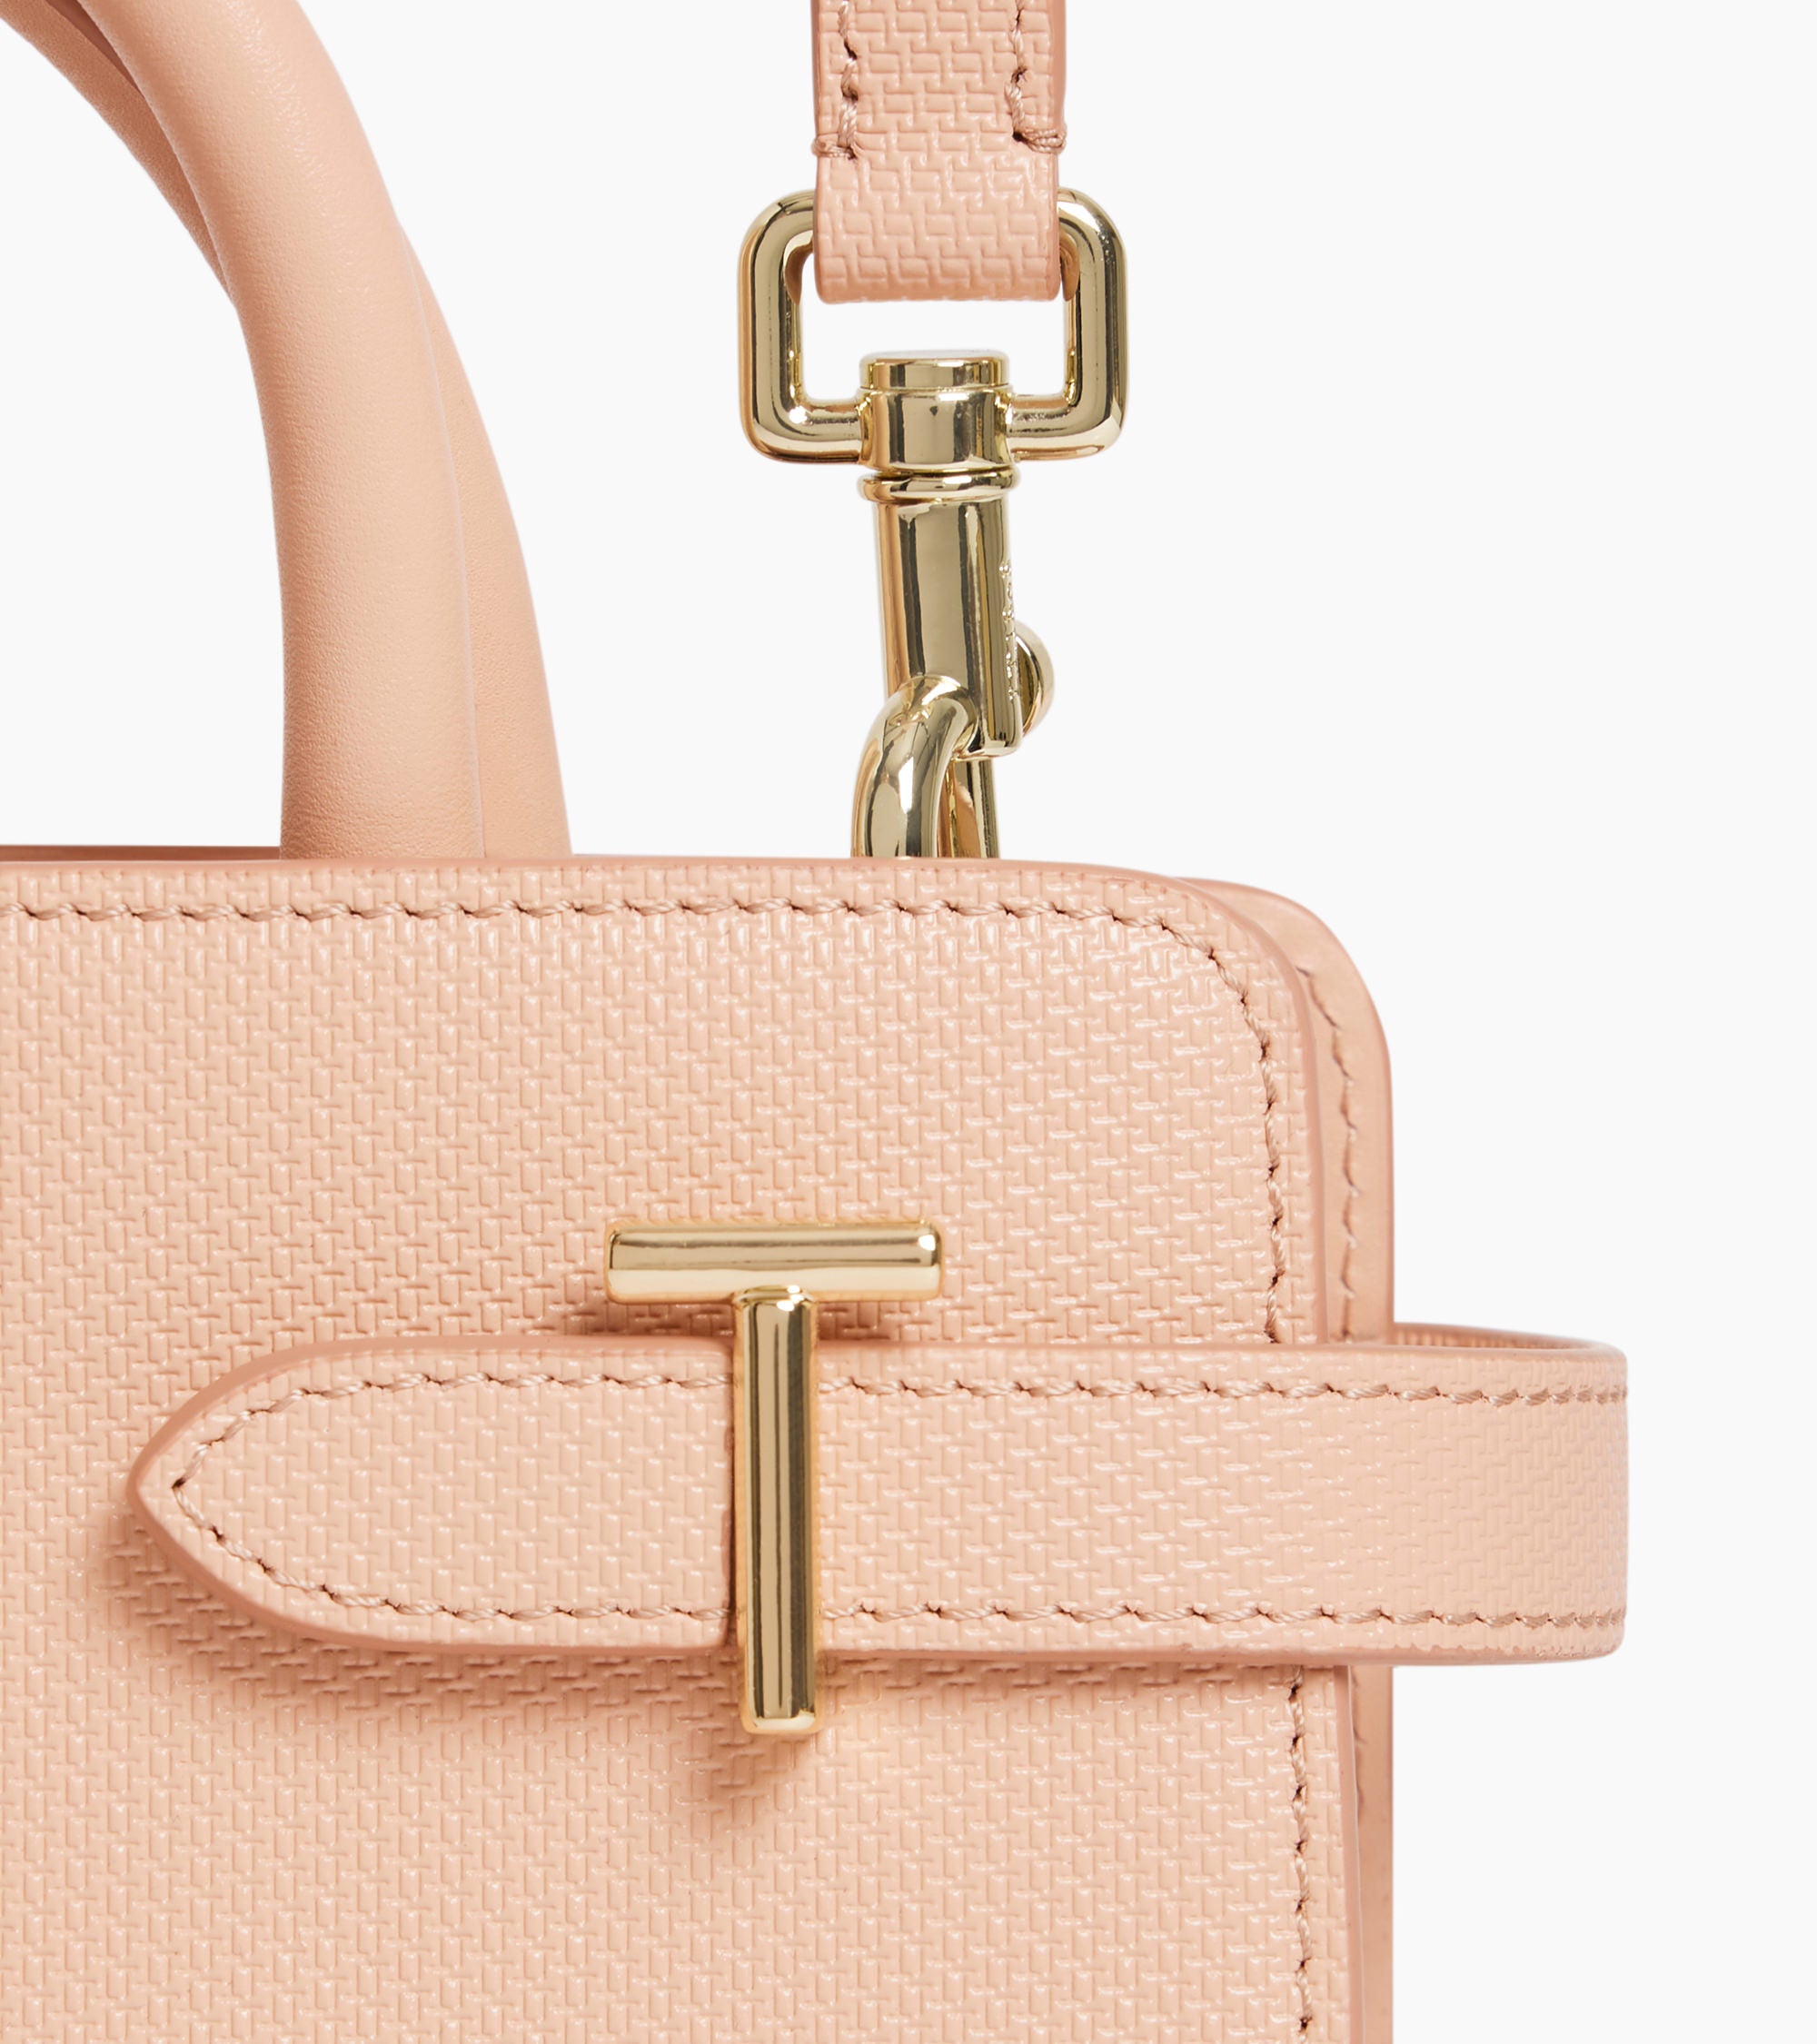 Emilie small handbag in signature T leather